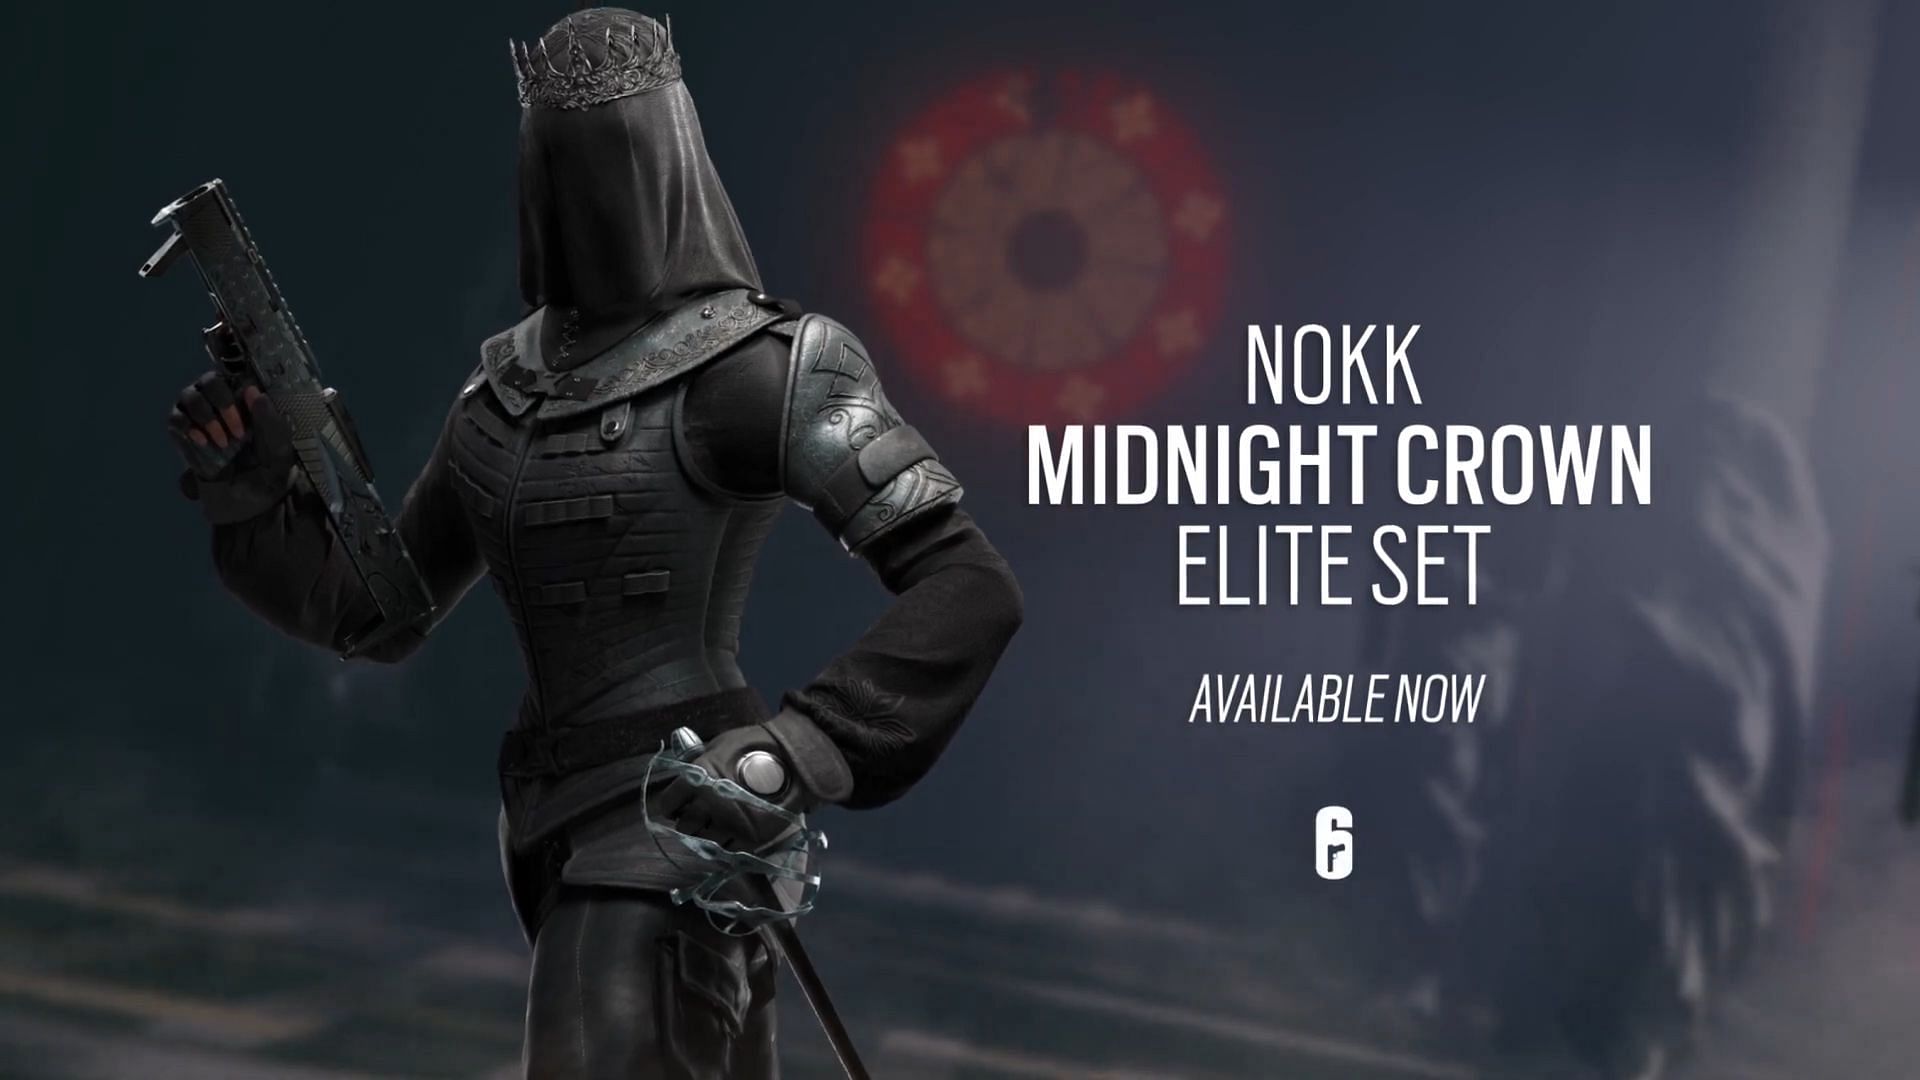 Nokk Elite Set is now available in Rainbow Six Siege.